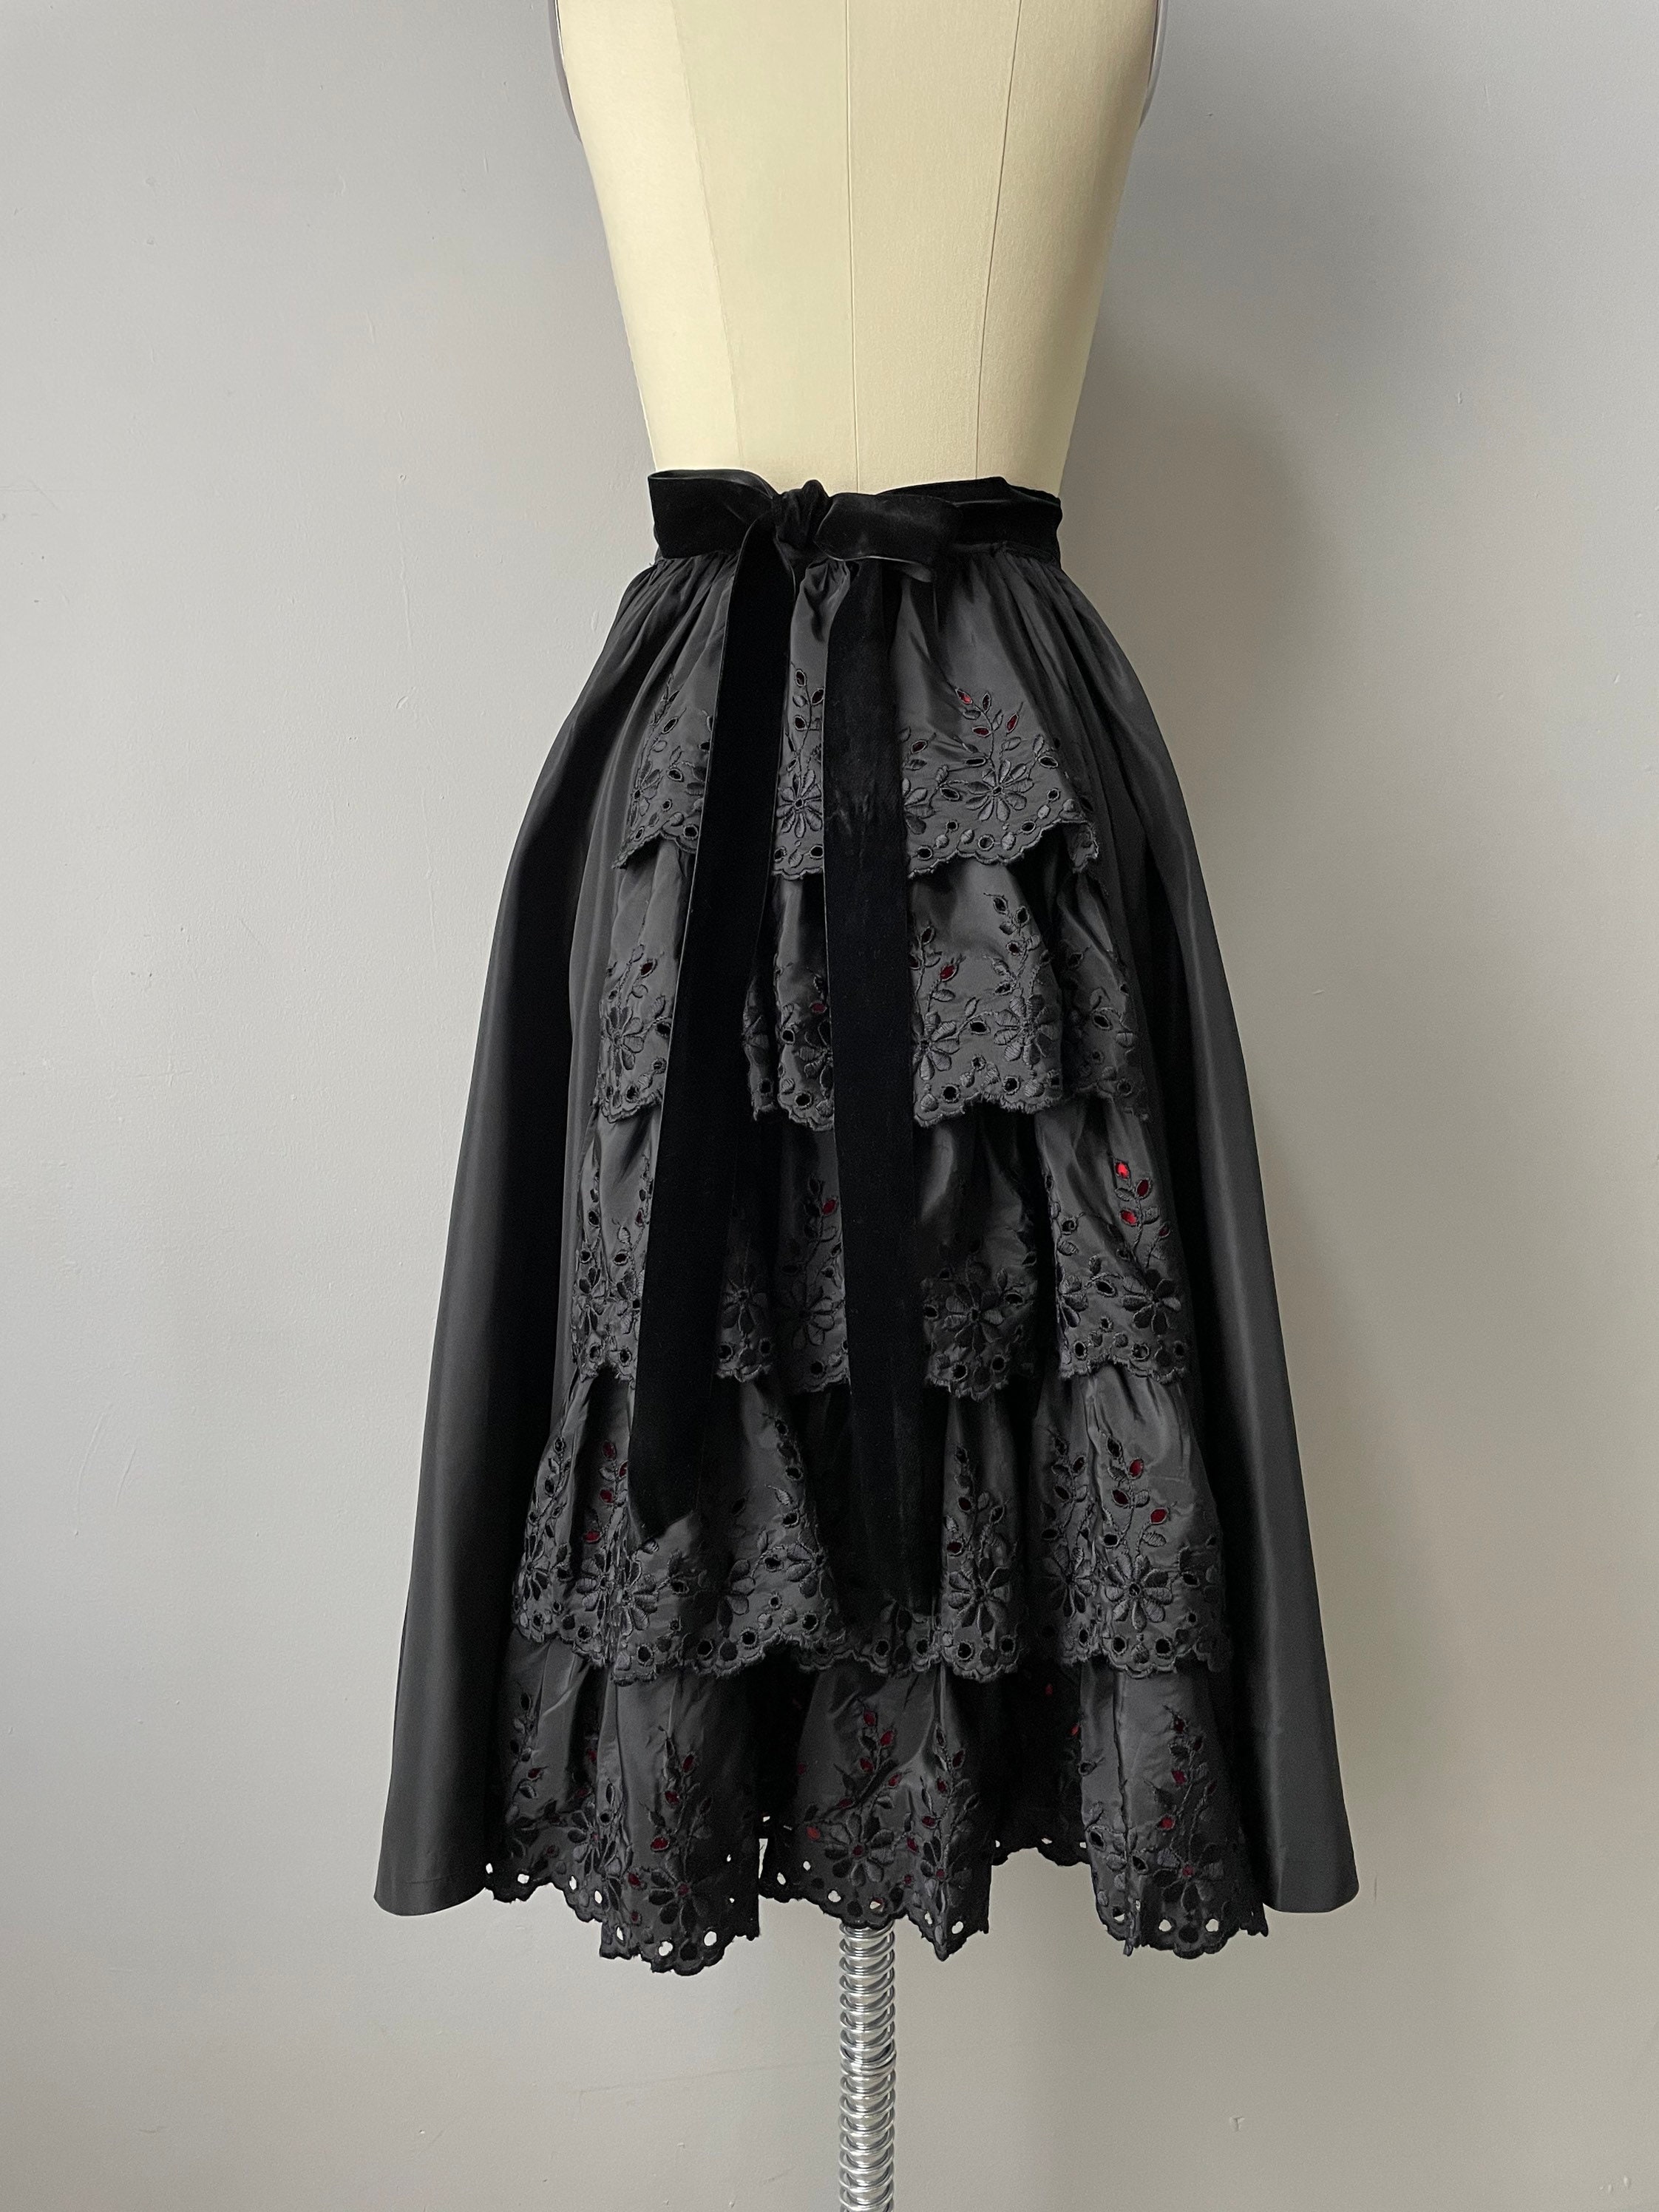 ORIGINAL 1950s TAFFETA RAYON Quilted Skirt